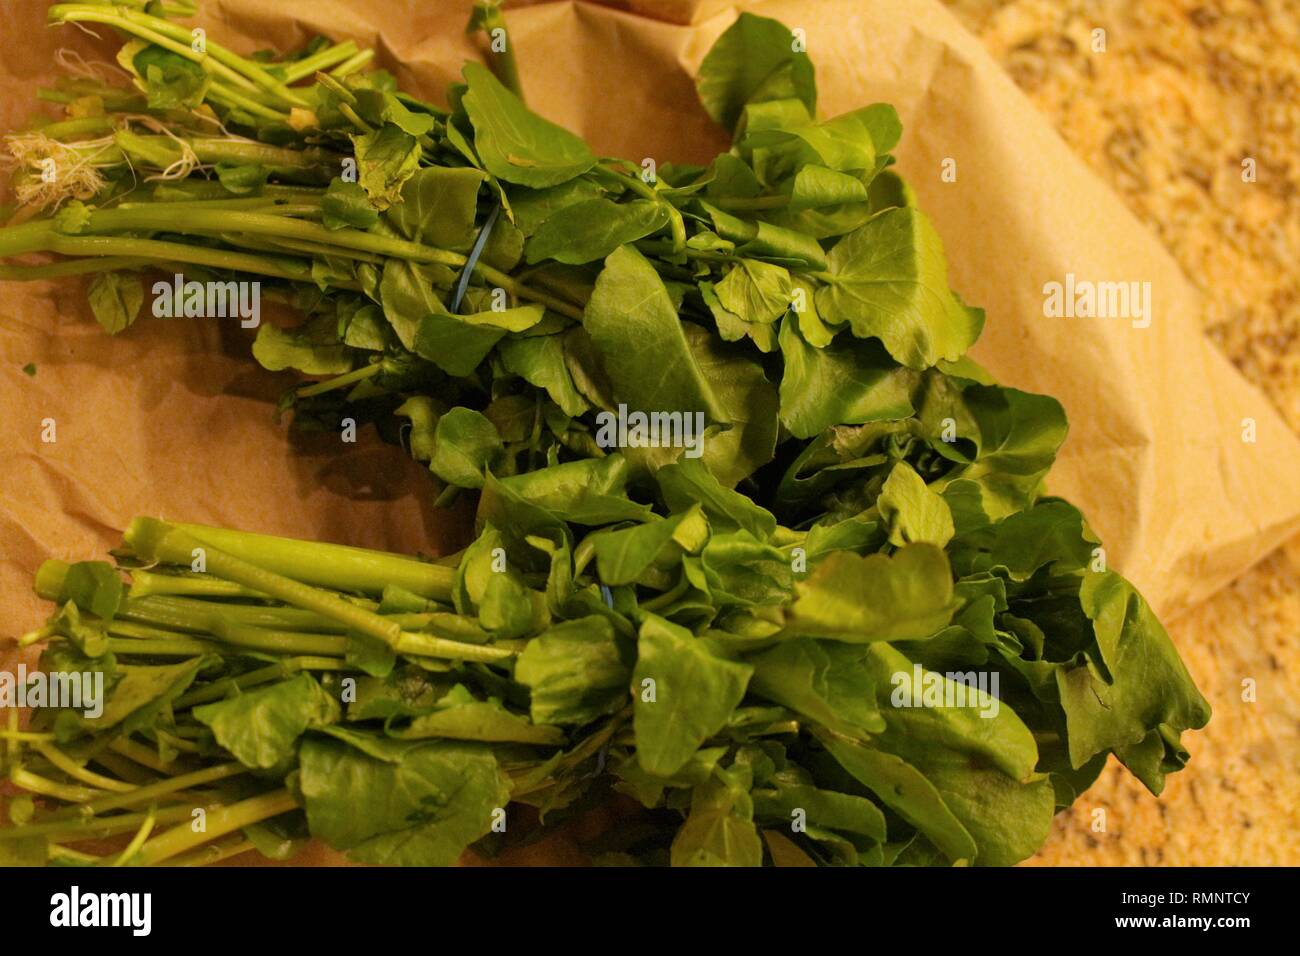 Watercress bundle on kitchen surface Stock Photo